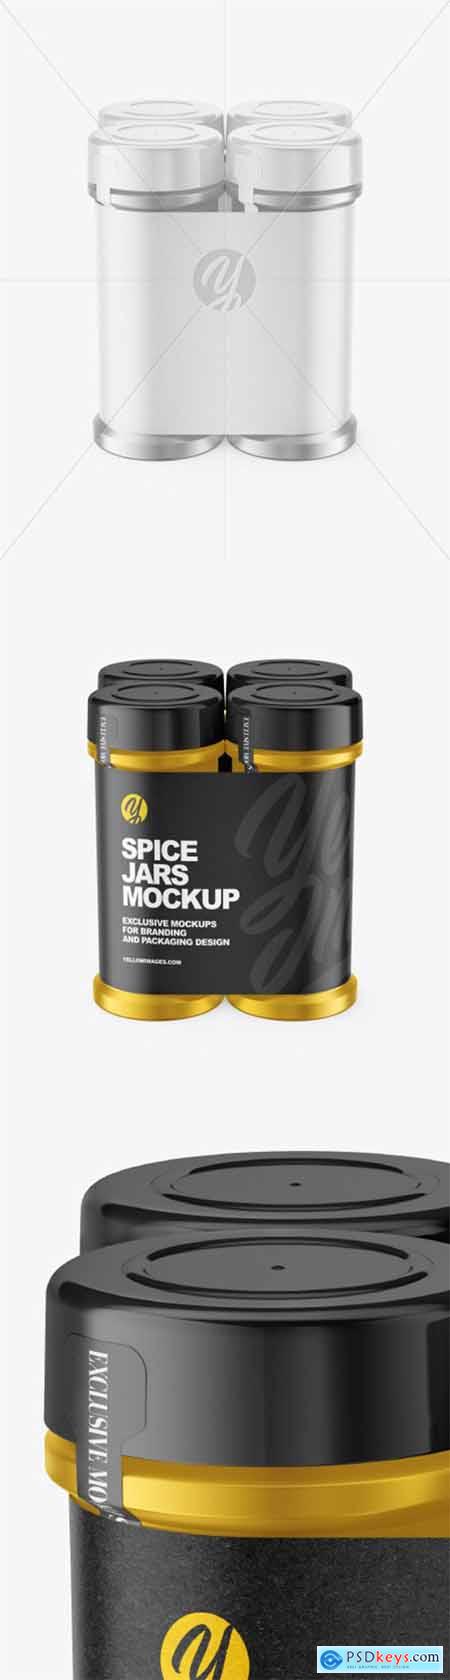 Four Metallic Spice Jars Mockup 80625